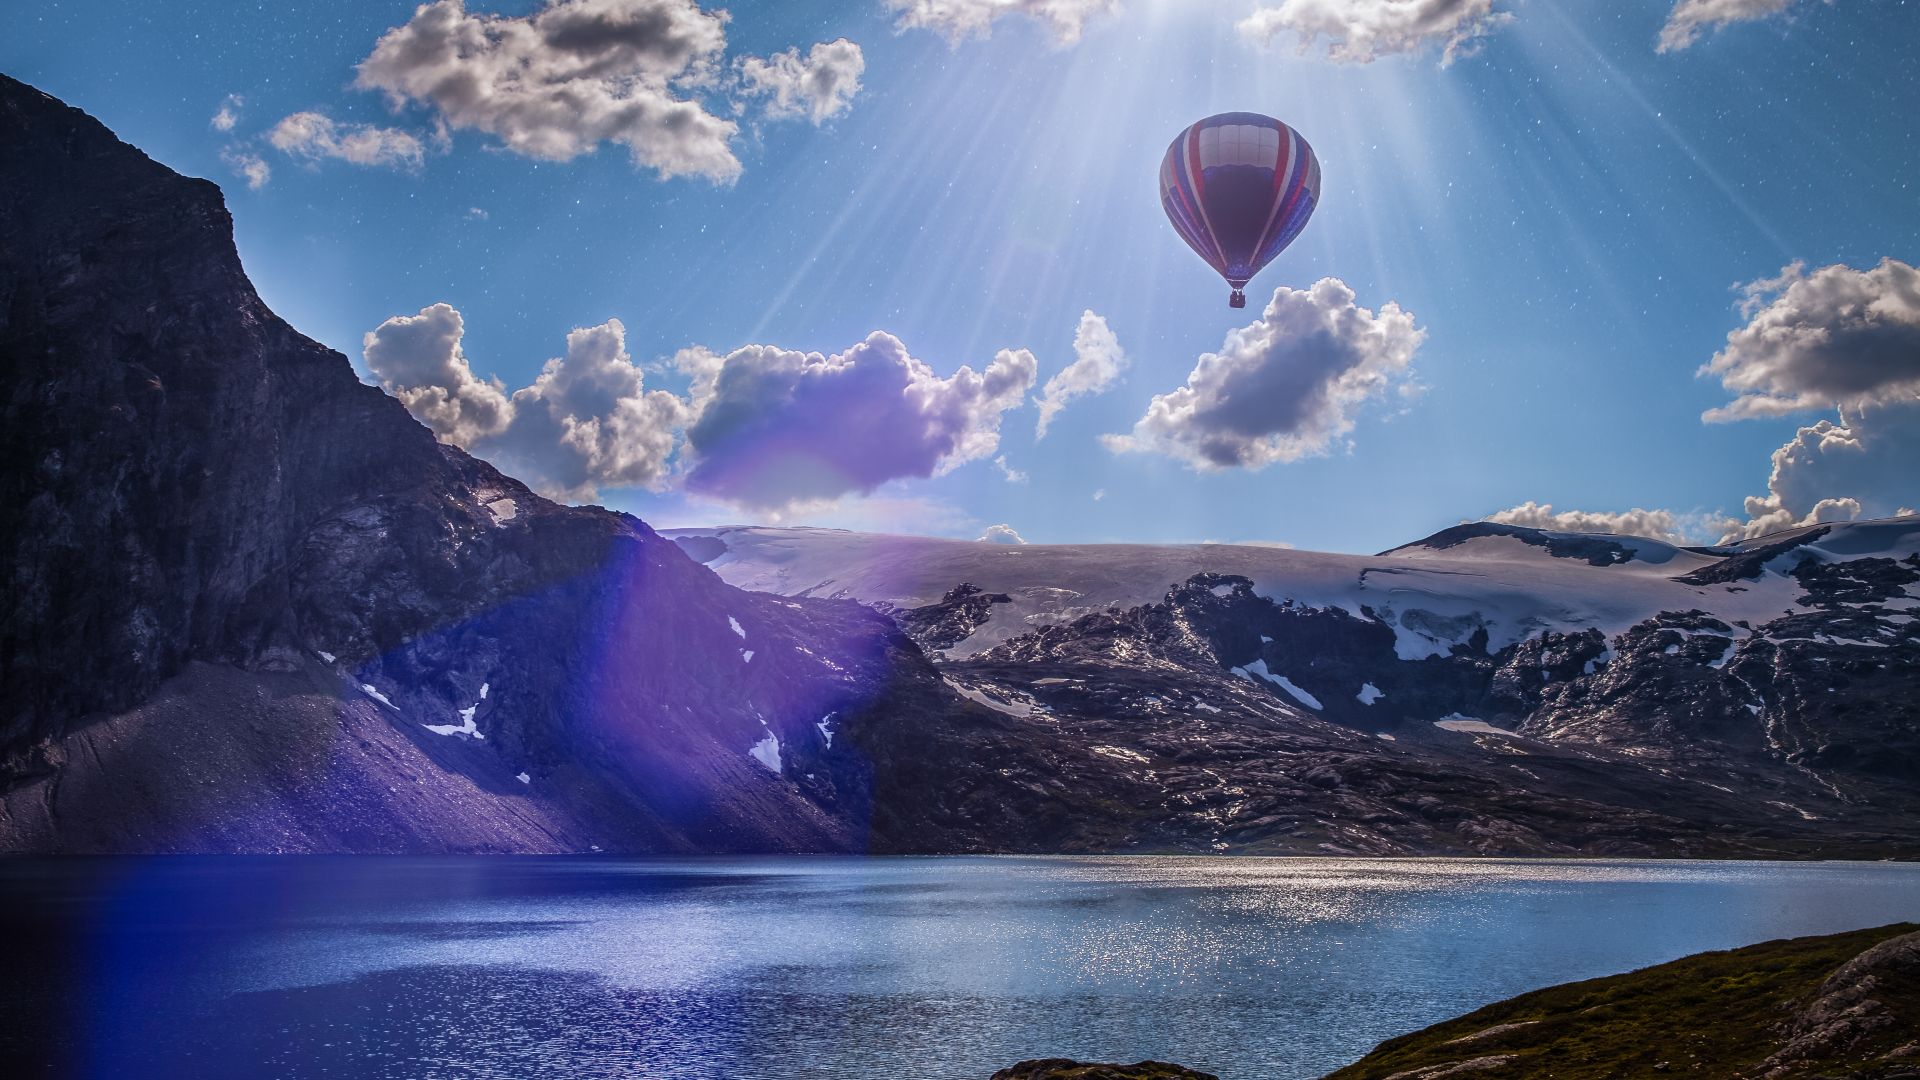 Норвегия, 4k, 5k, 8k, воздушный шар, озеро, горы, облака, Norway, 4k, 5k wallpaper, 8k, balloon, lake, mountains, clouds (horizontal)